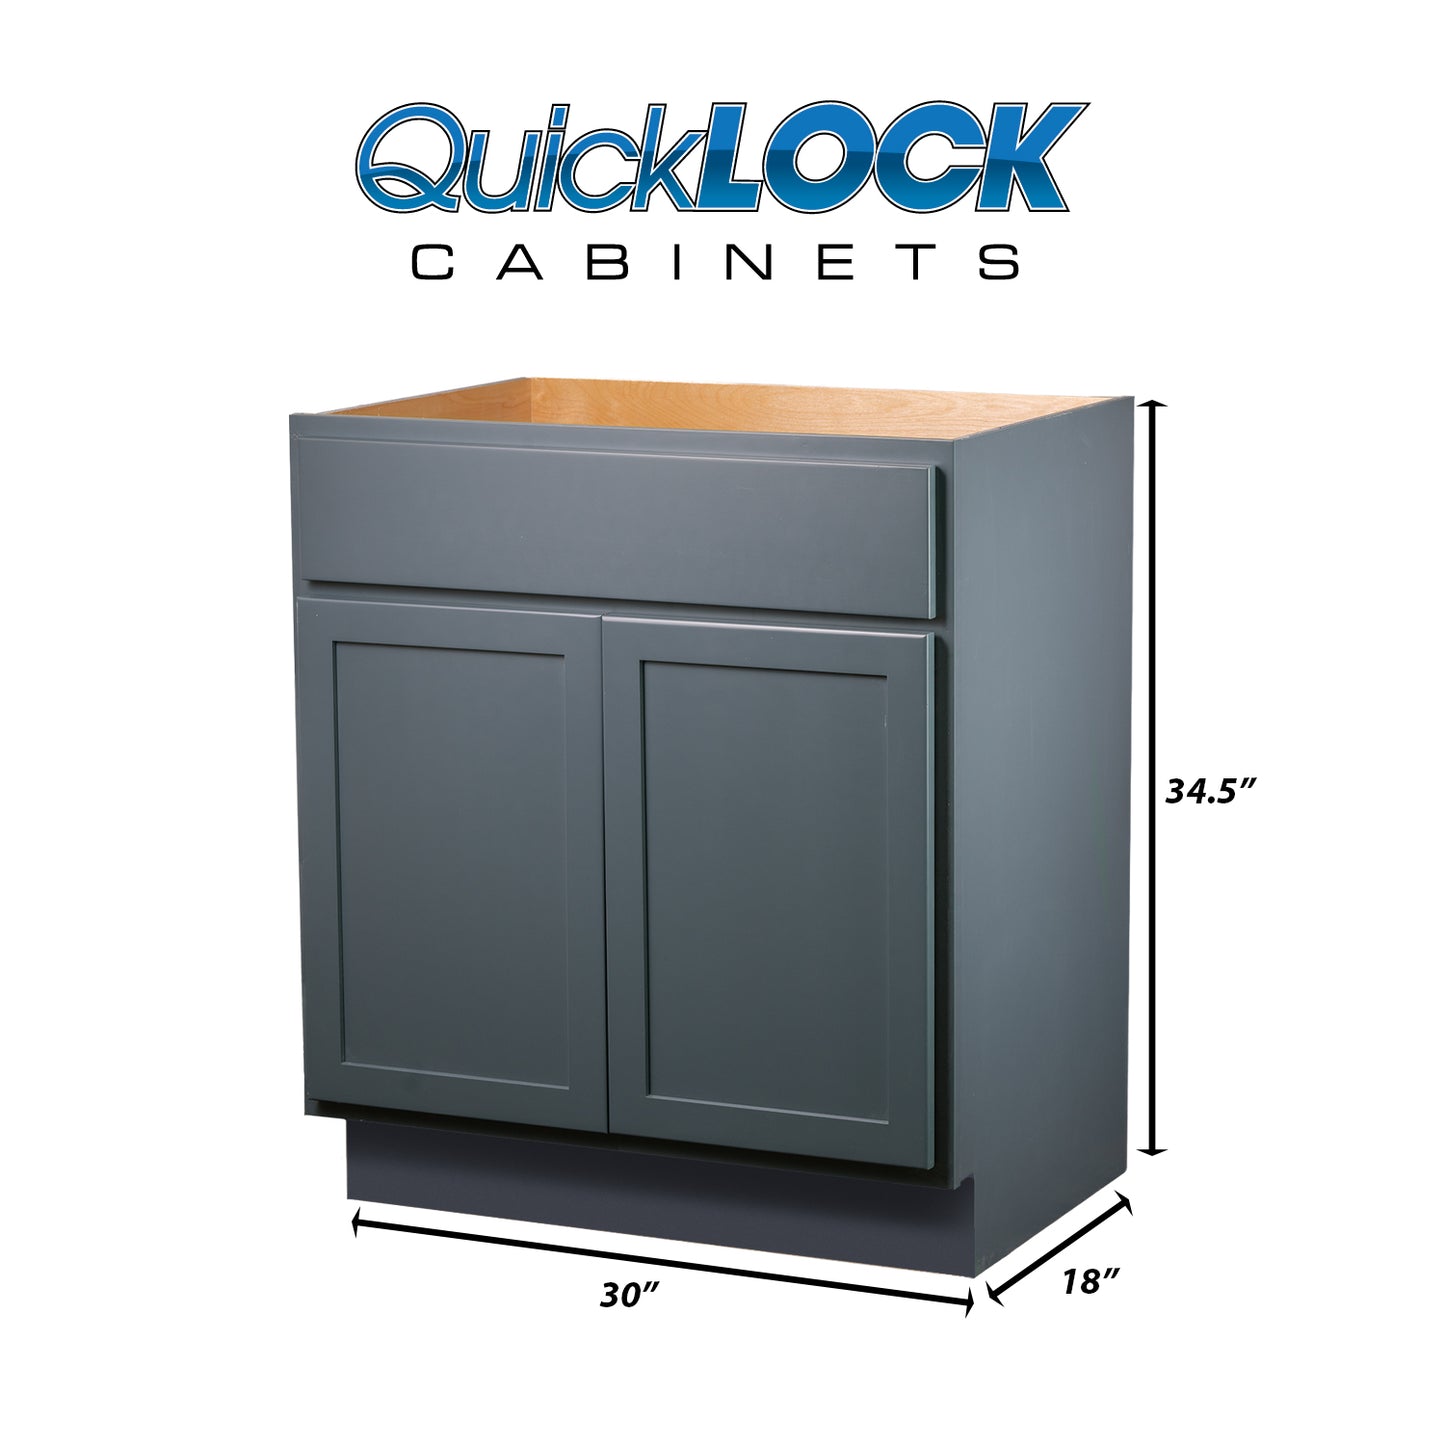 Quicklock RTA (Ready-to-Assemble) Needlepoint Navy Vanity Base Cabinet | 30"Wx34.5"Hx18"D